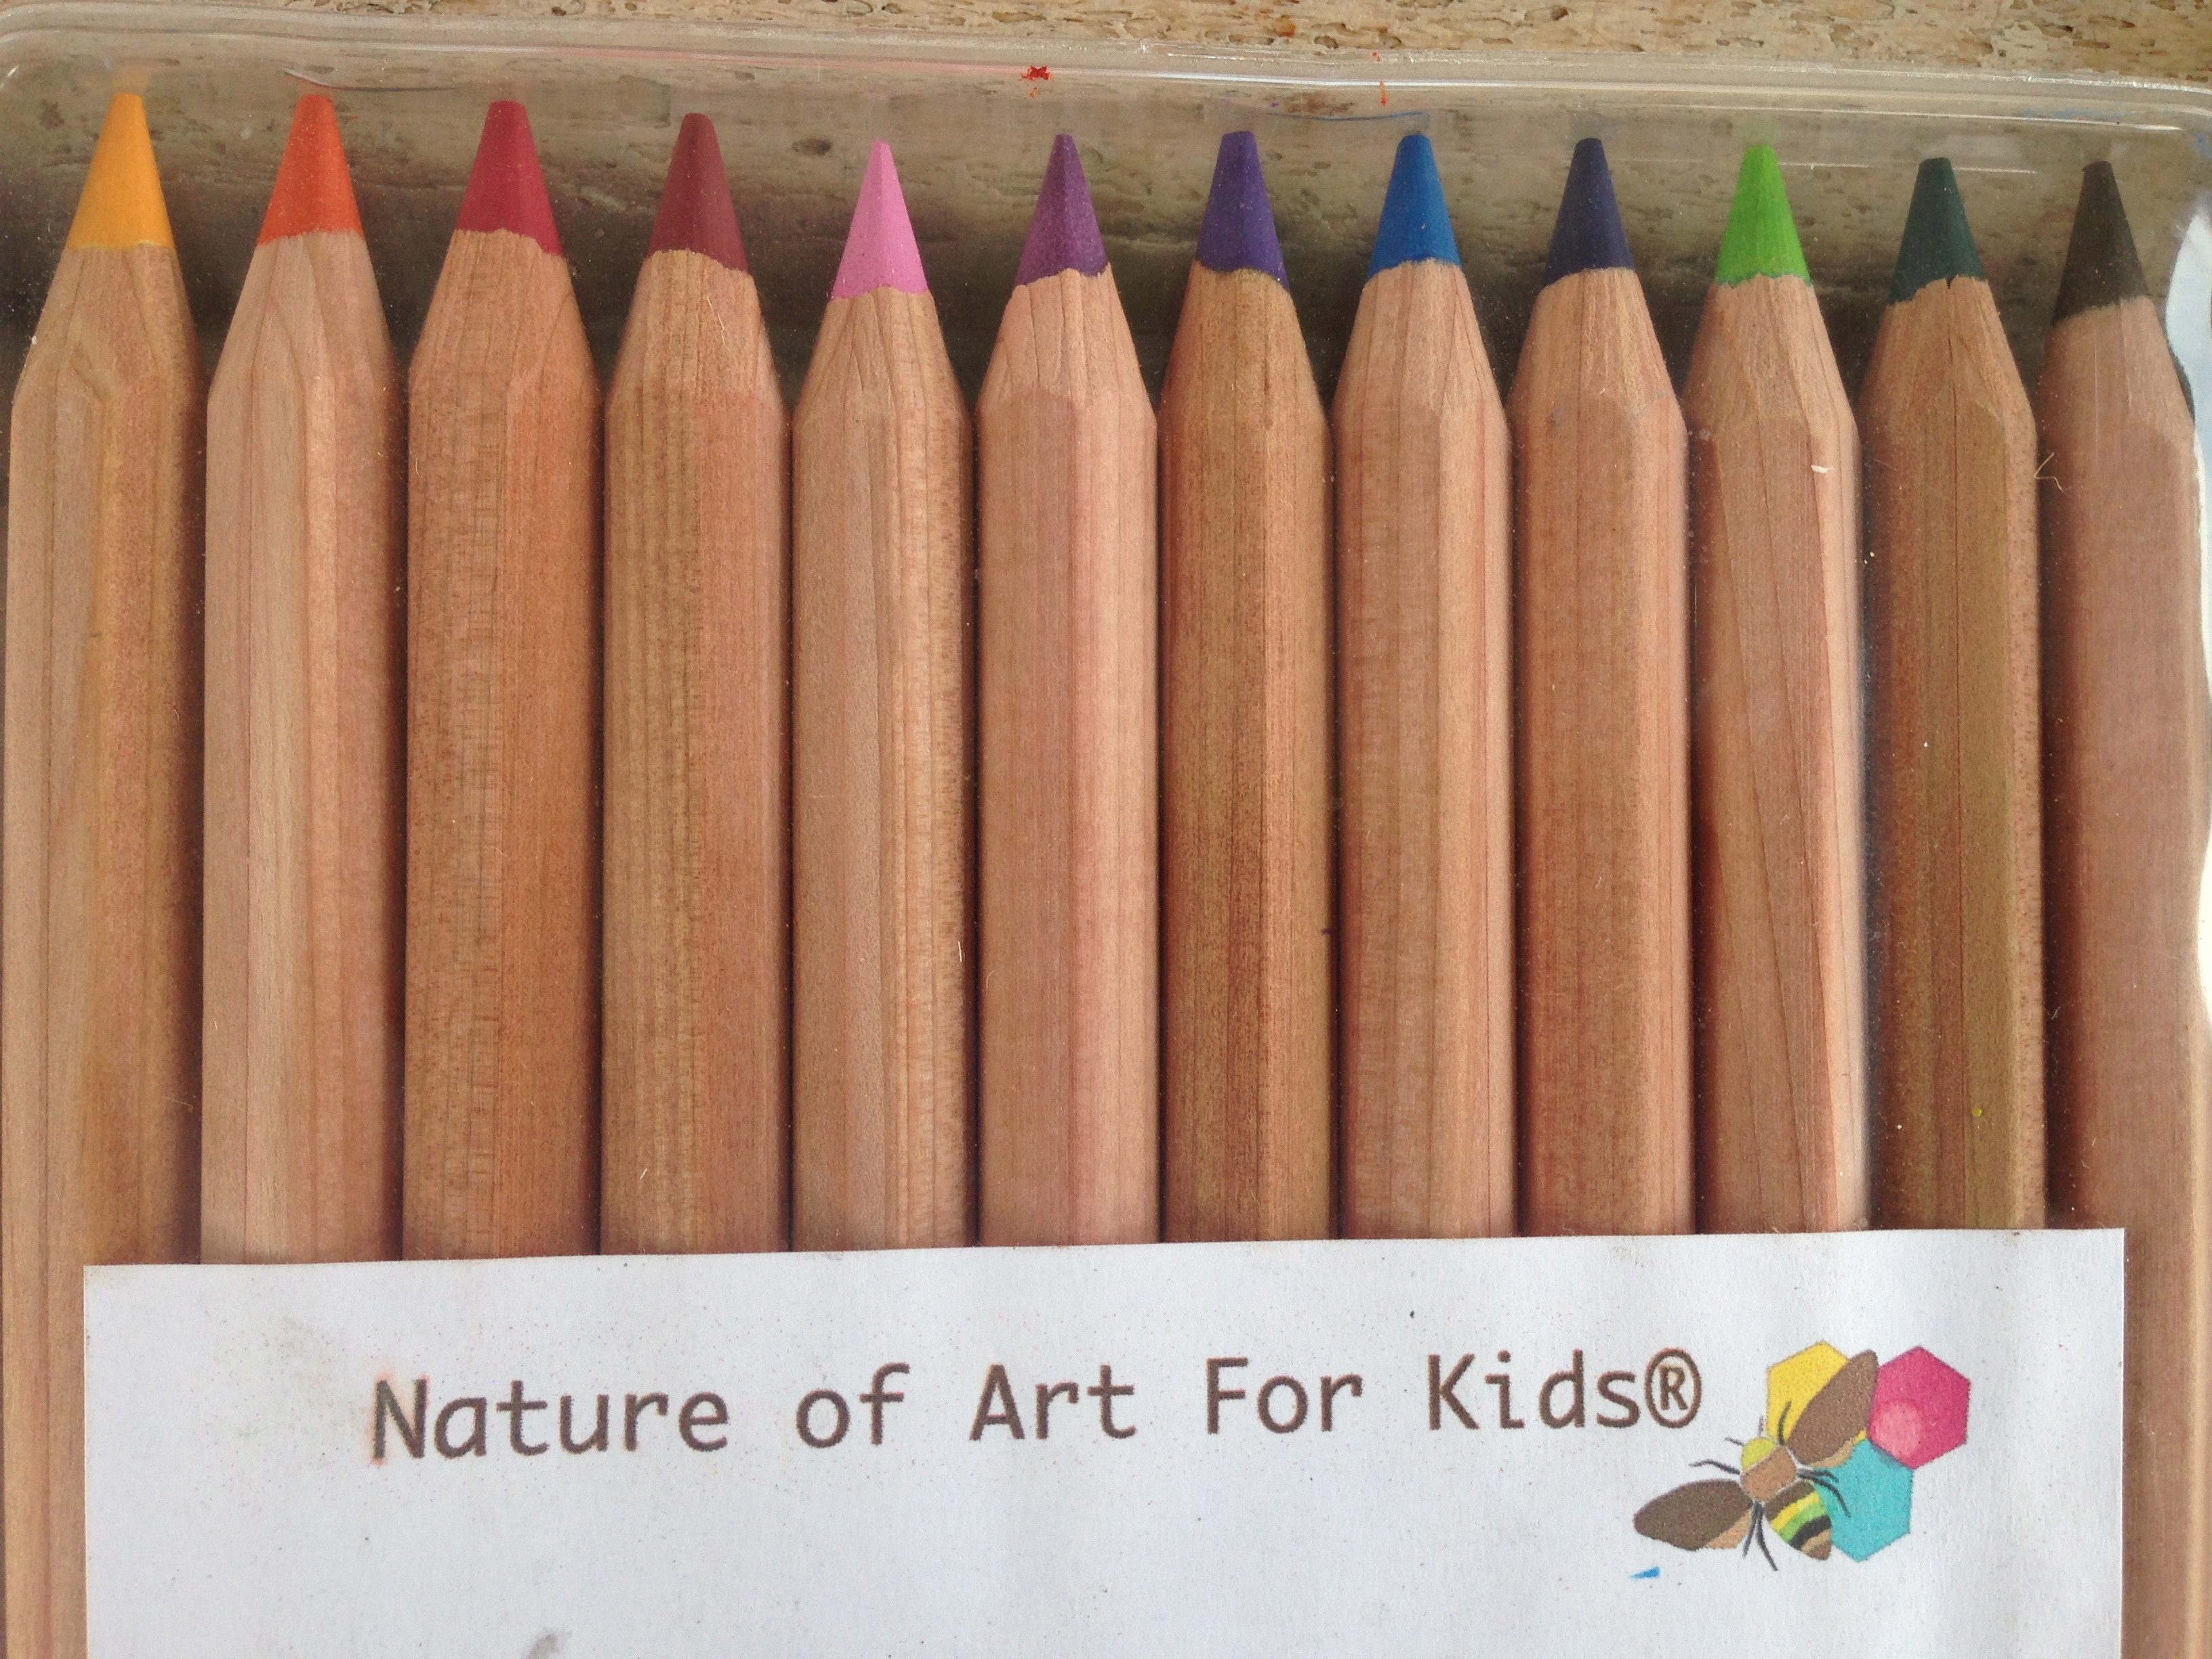 Sunnyglade Eco-Friendly Art Supplies For Kids, 185-Piece